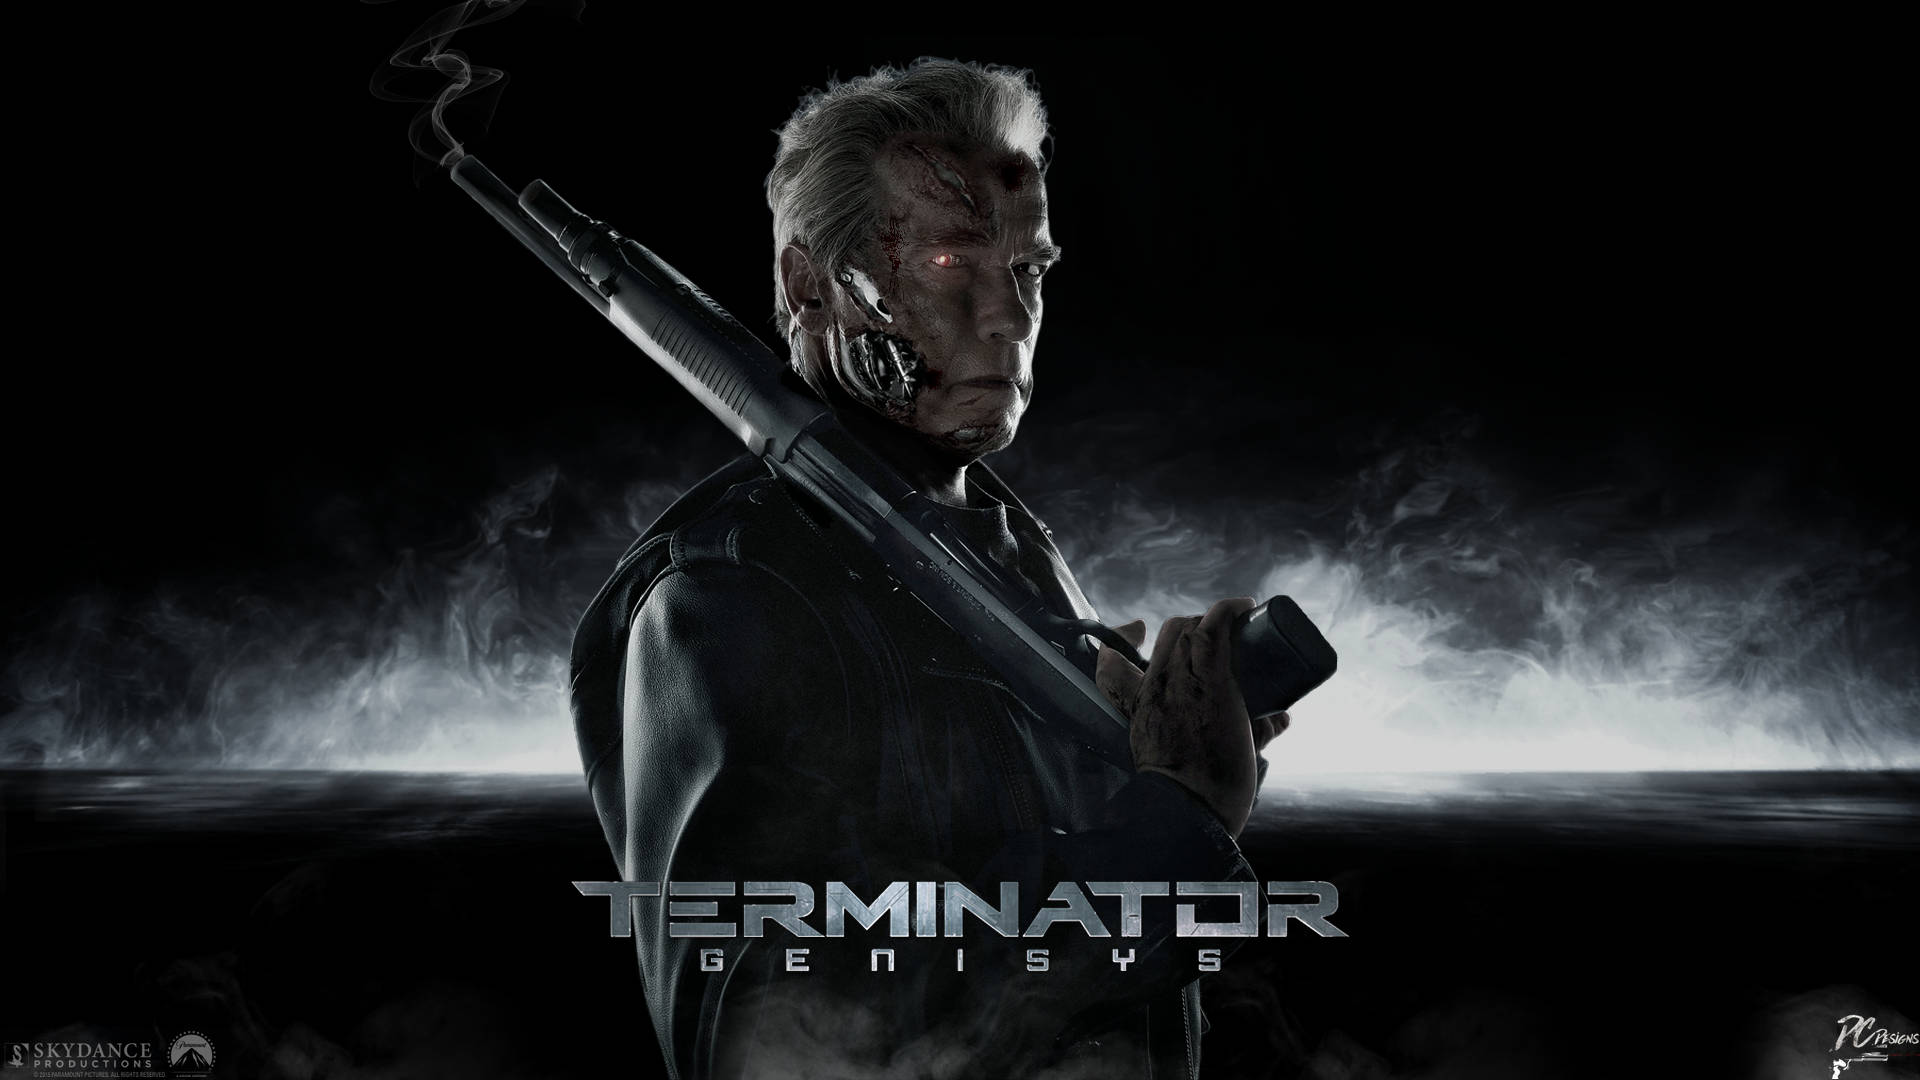 Terminator Movie Poster Background